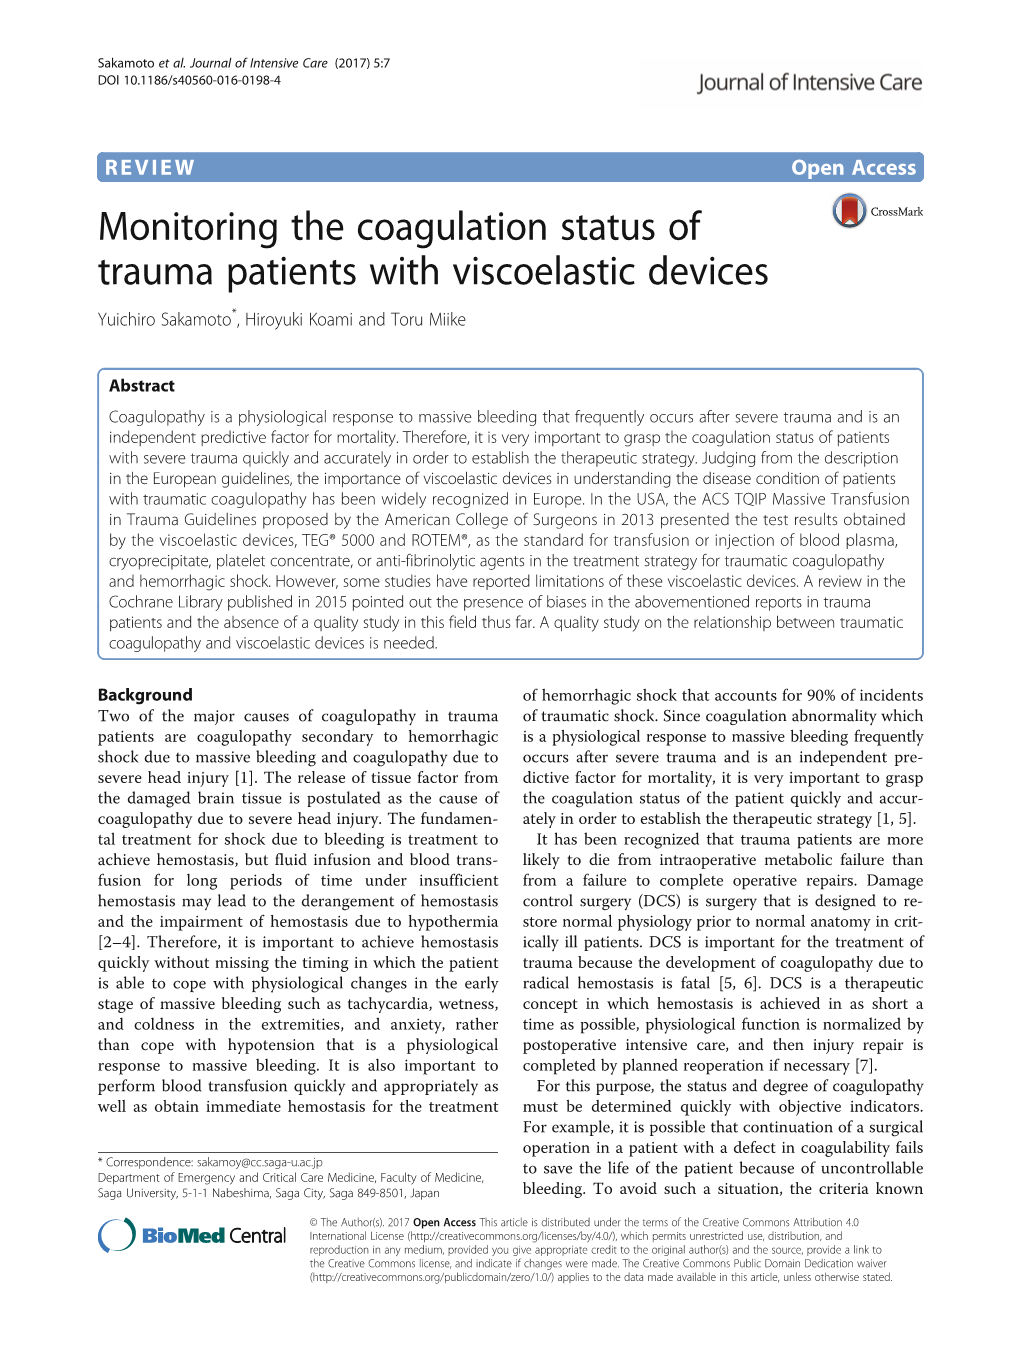 Monitoring the Coagulation Status of Trauma Patients with Viscoelastic Devices Yuichiro Sakamoto*, Hiroyuki Koami and Toru Miike